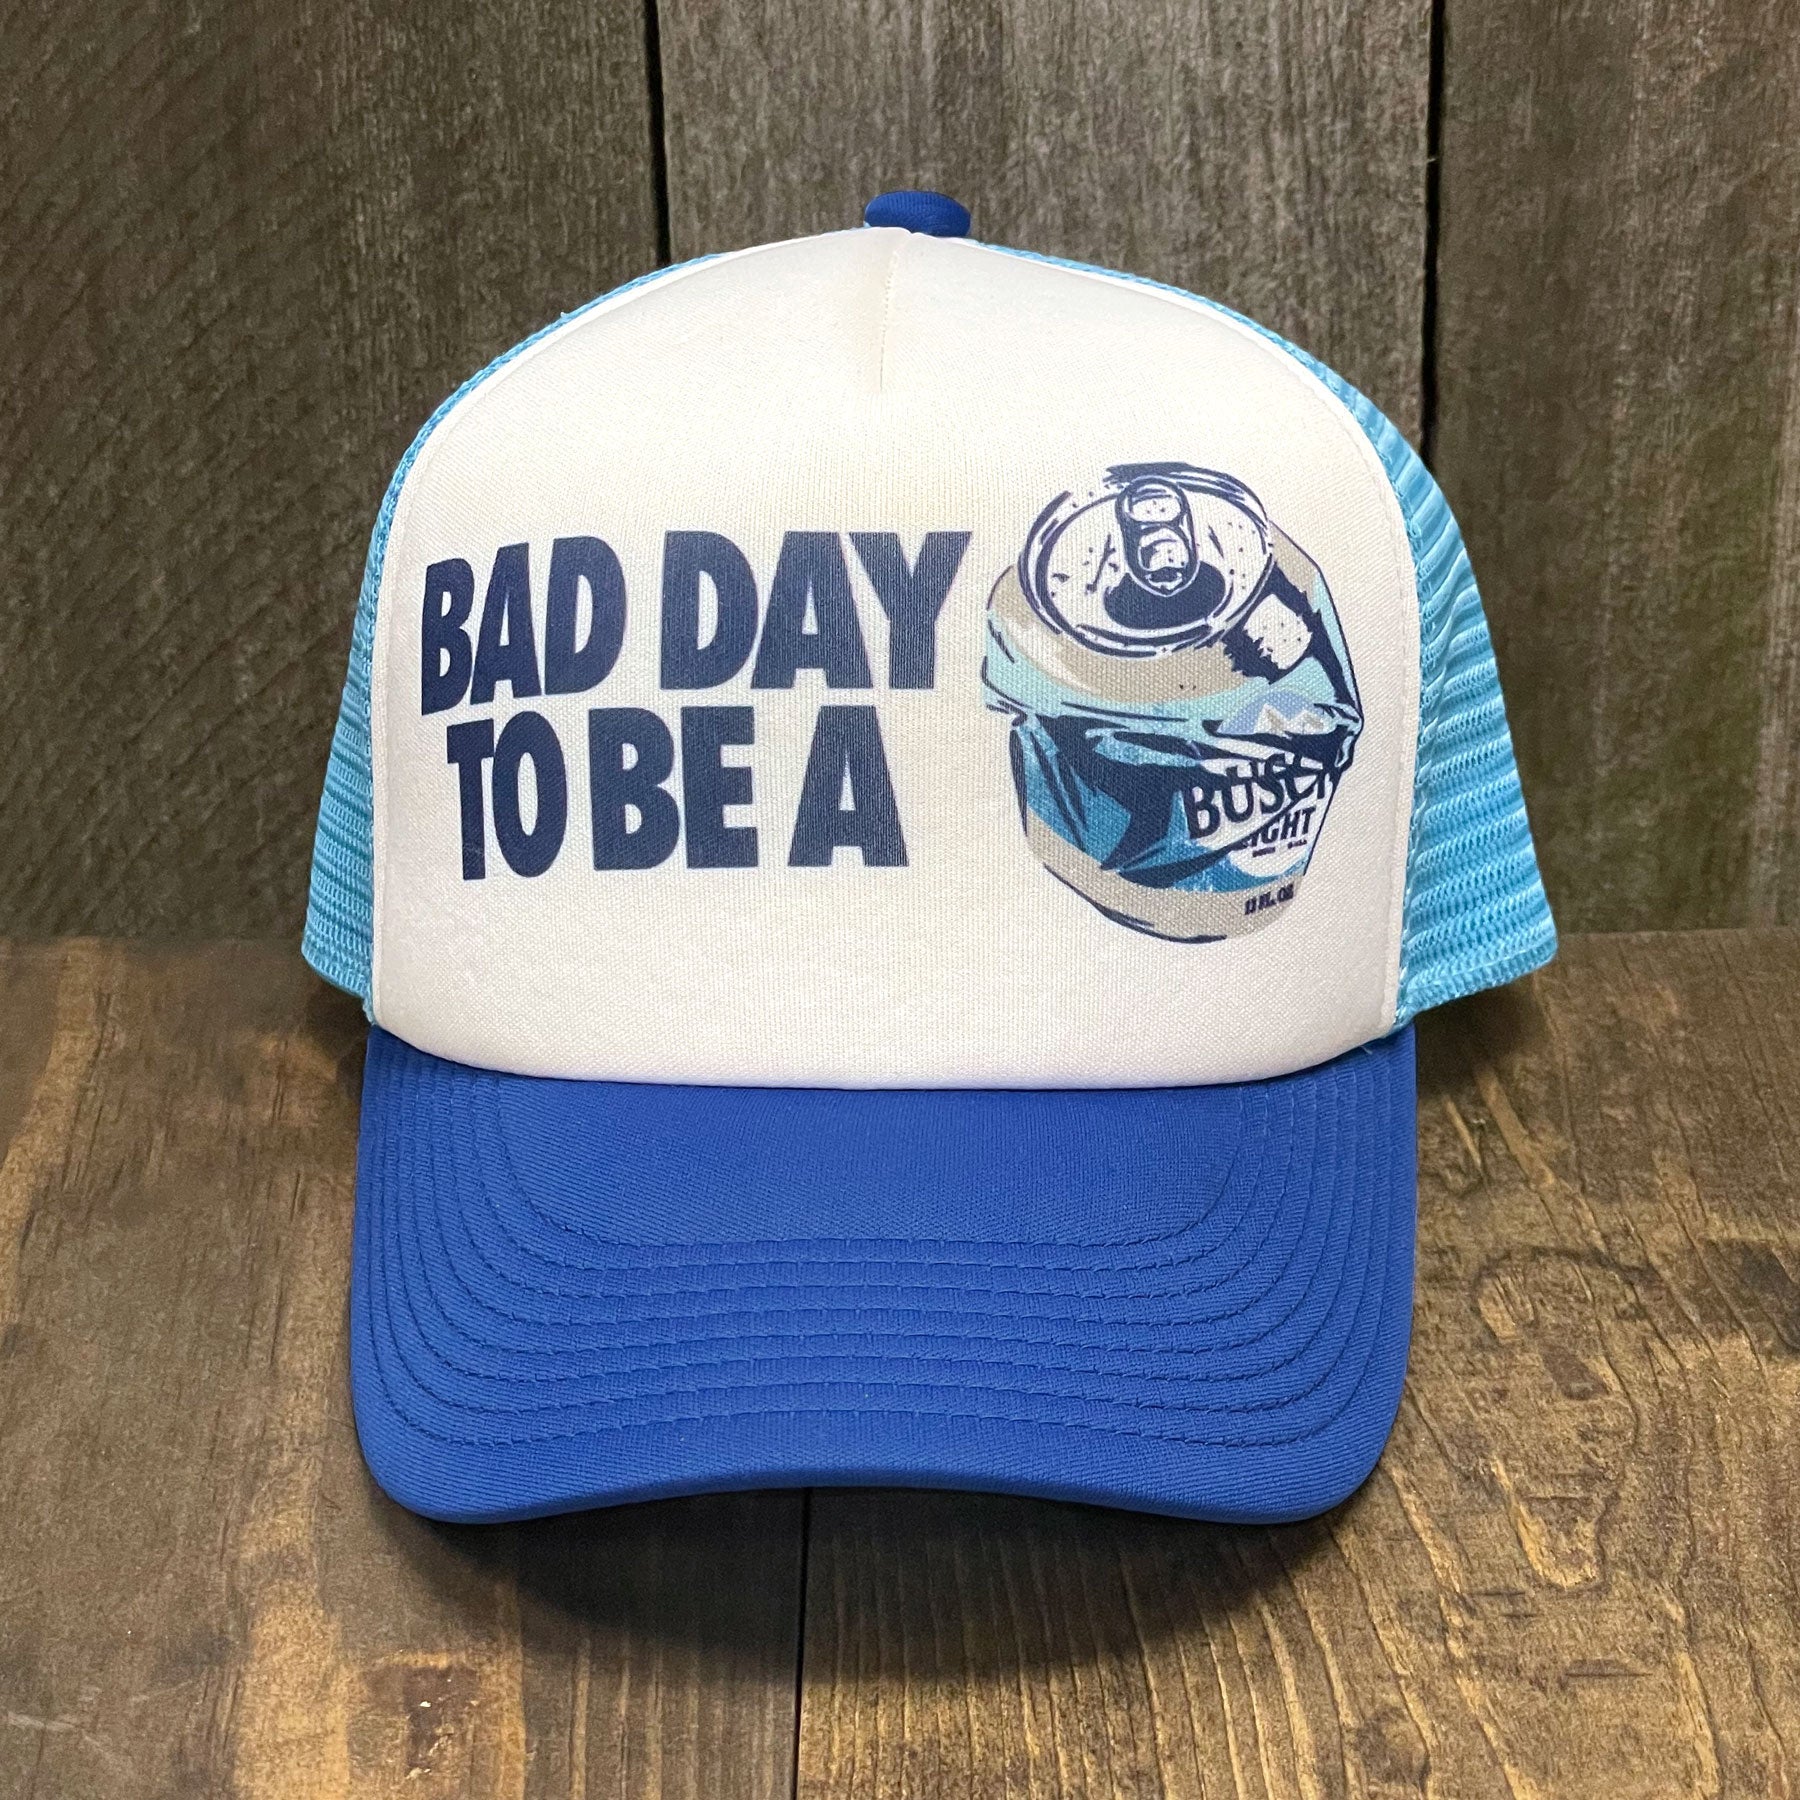 Busch Light Beer Hat 